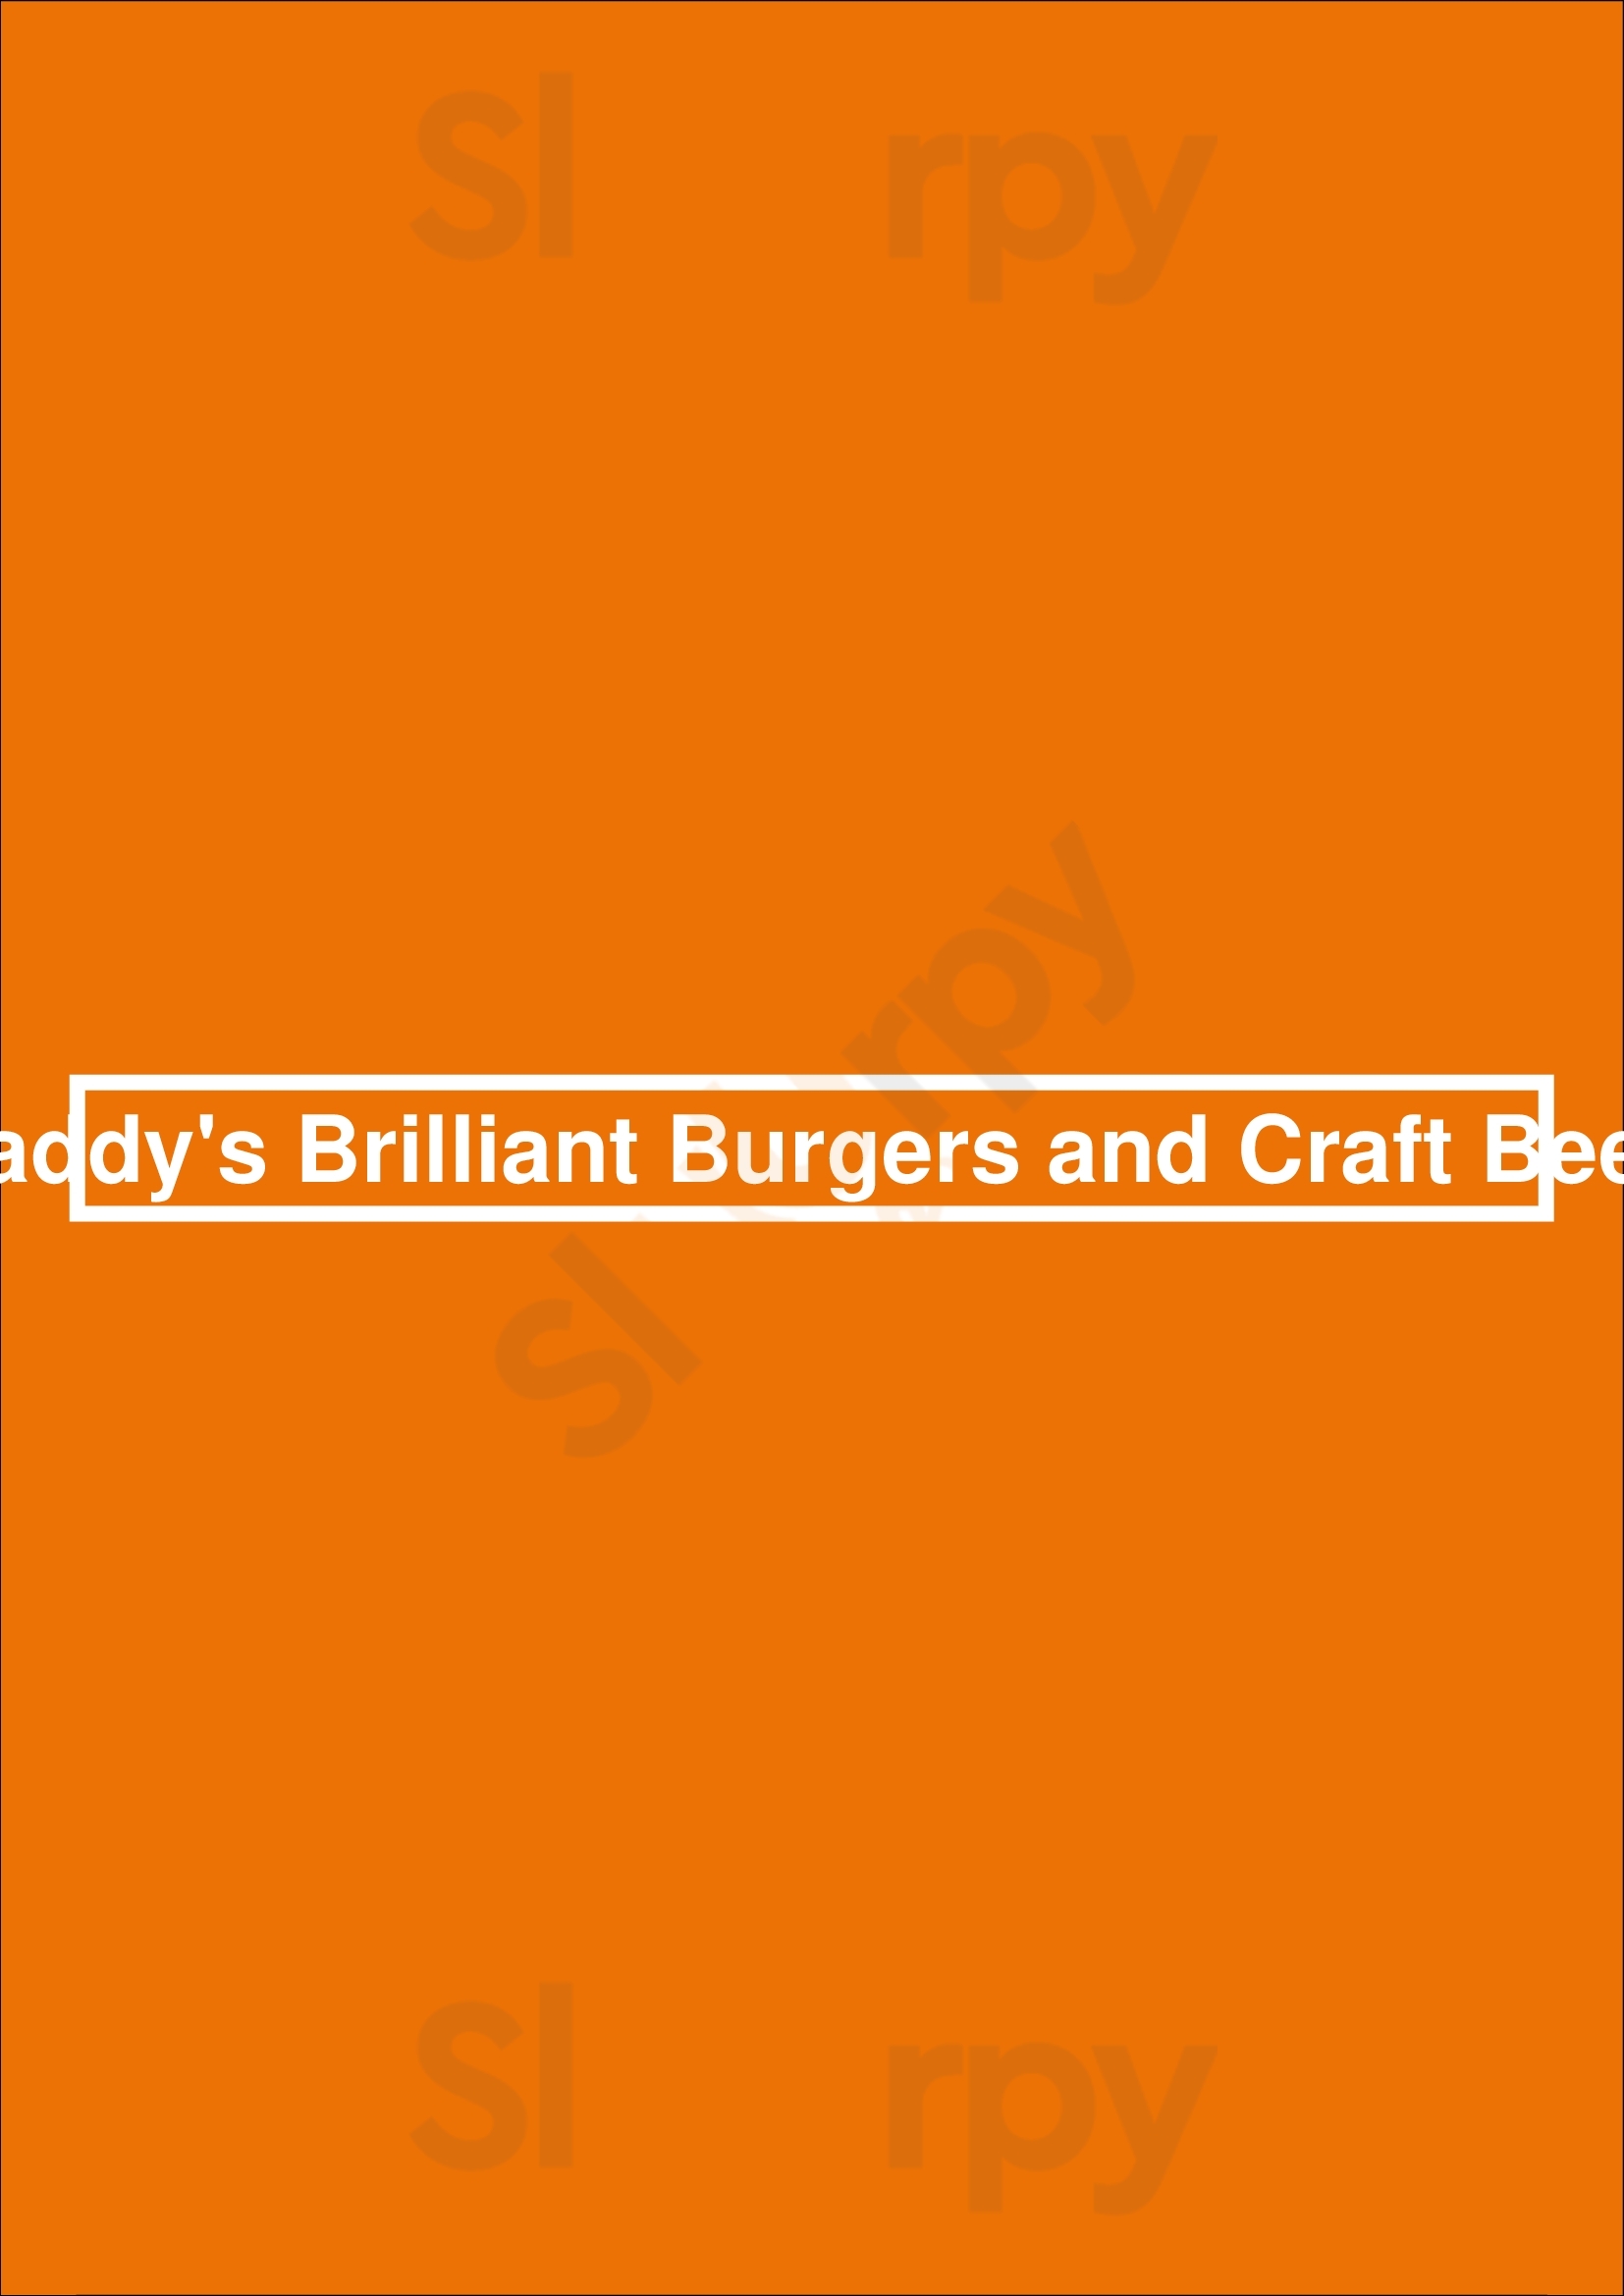 Flipdaddy's Brilliant Burgers And Craft Beer Bar Cincinnati Menu - 1